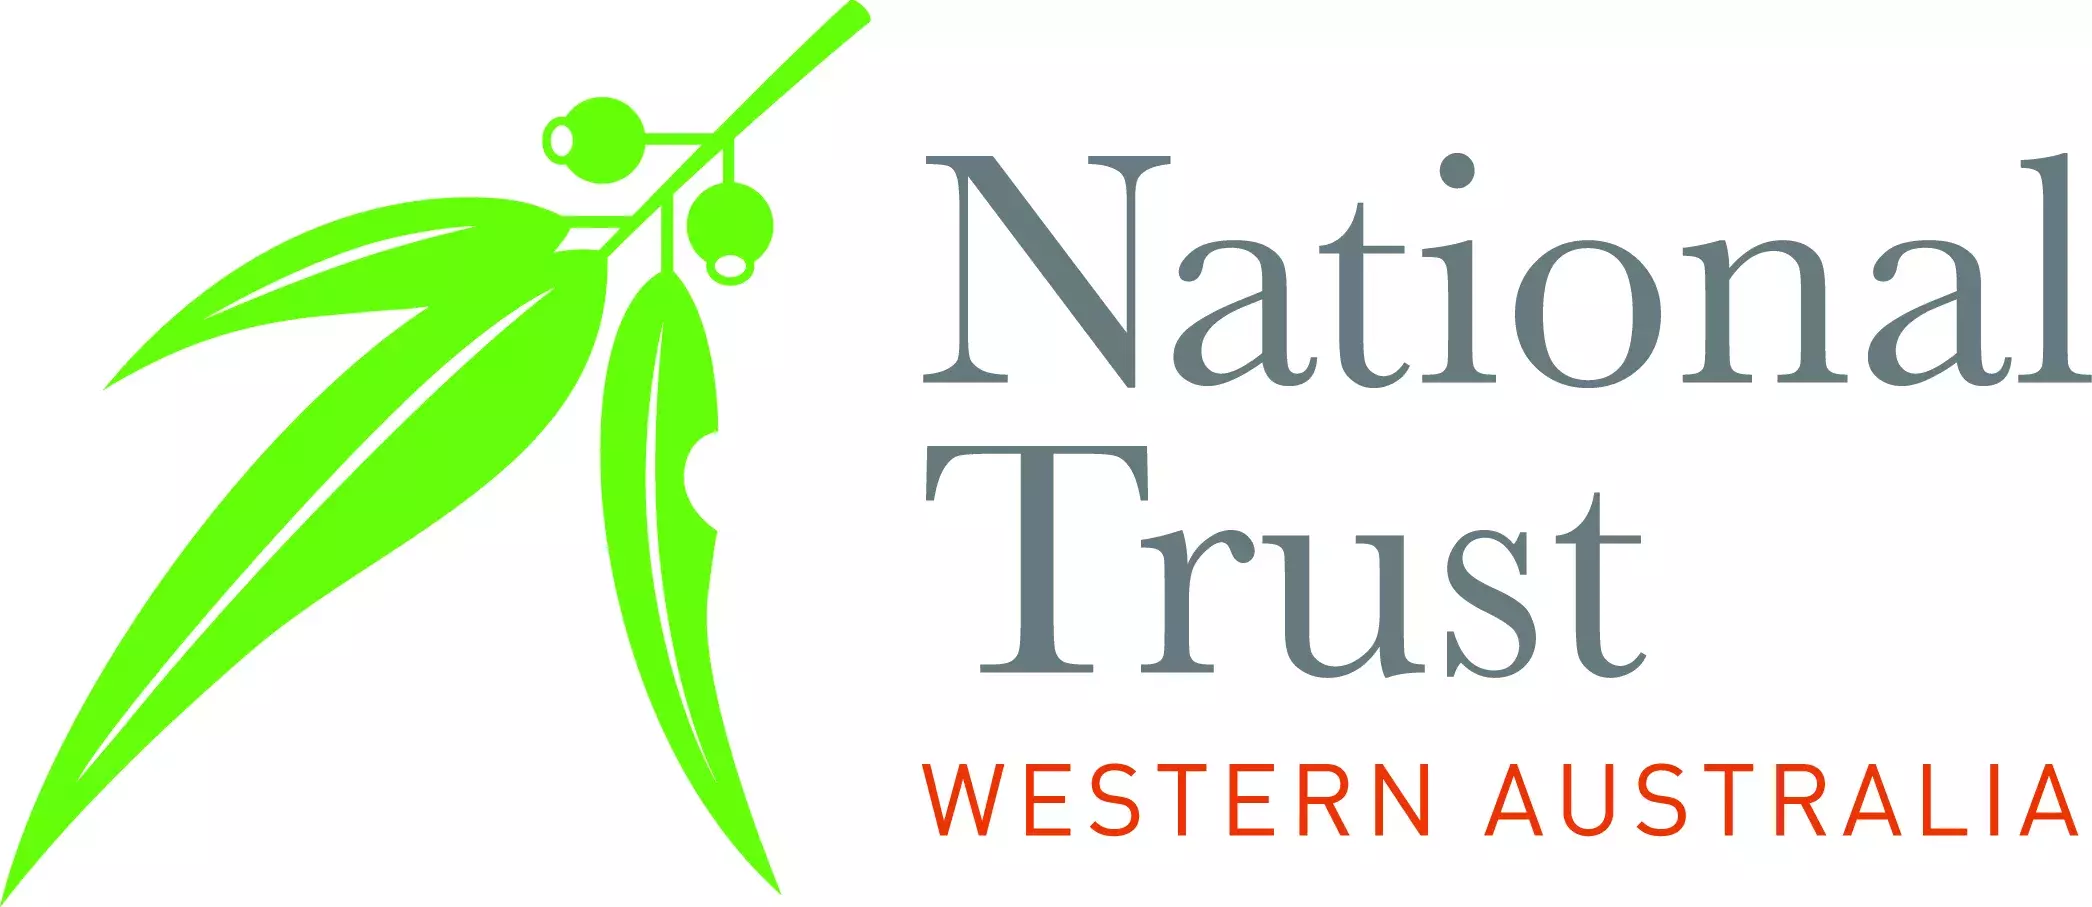 logo for National Trust of Western Australia showing a green eucalyptus leaf 